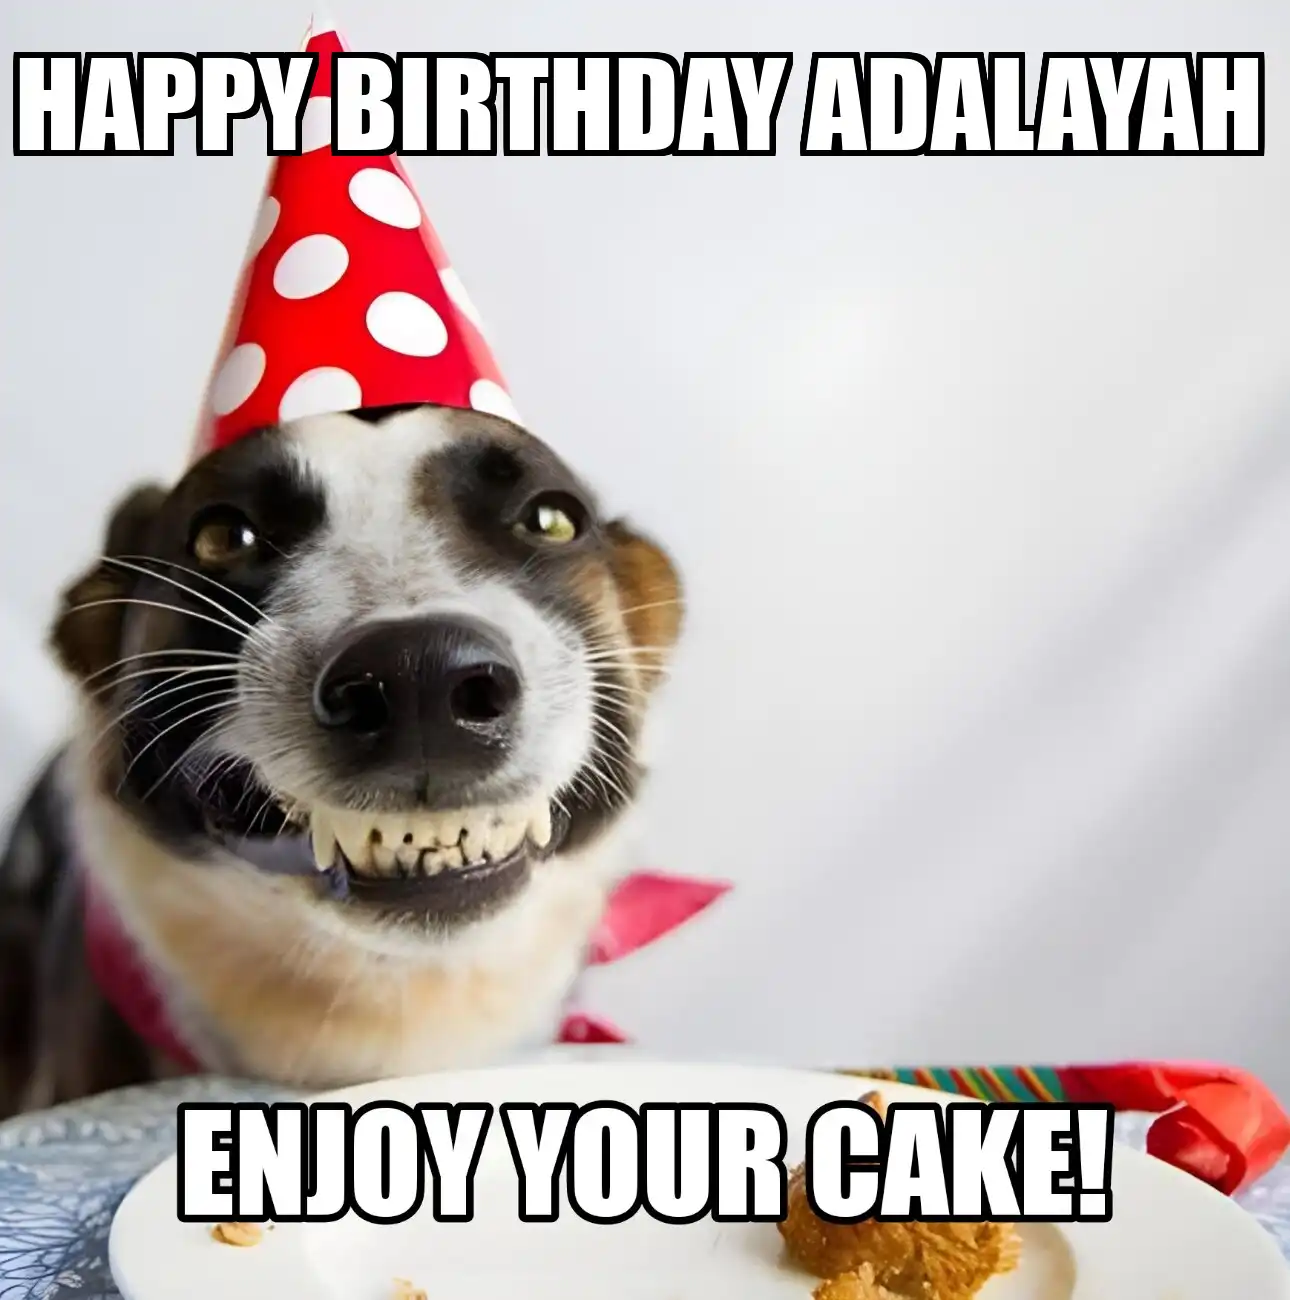 Happy Birthday Adalayah Enjoy Your Cake Dog Meme